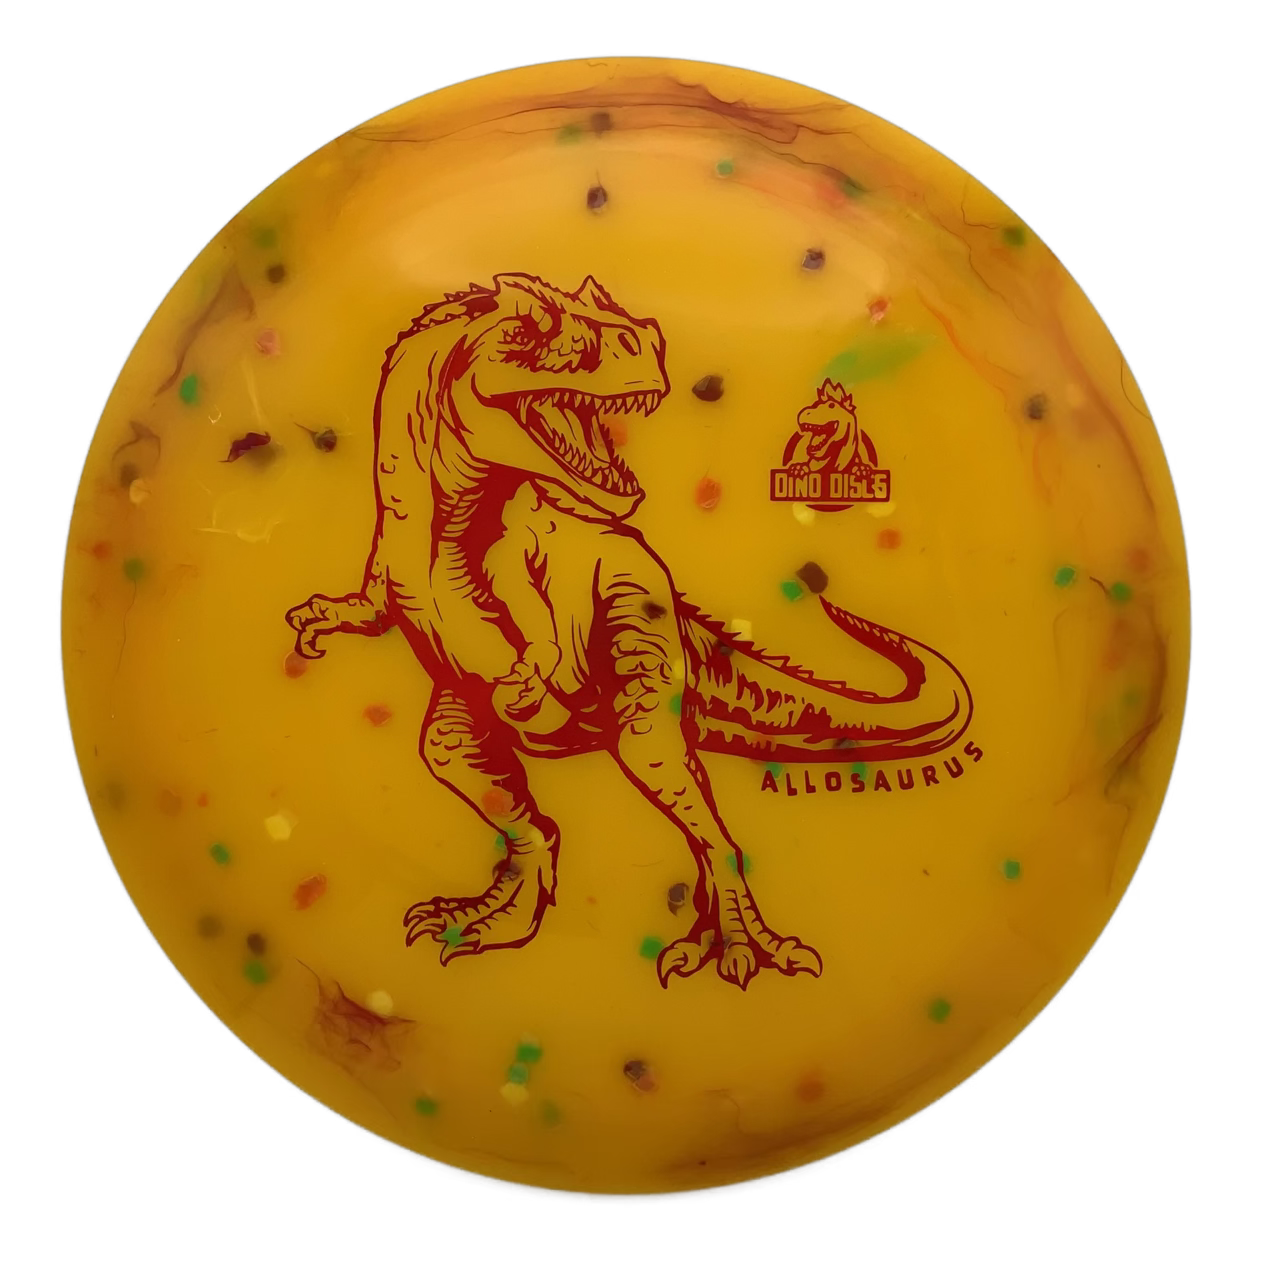 Dino Discs Allosaurus - Astro Discs TX - Houston Disc Golf